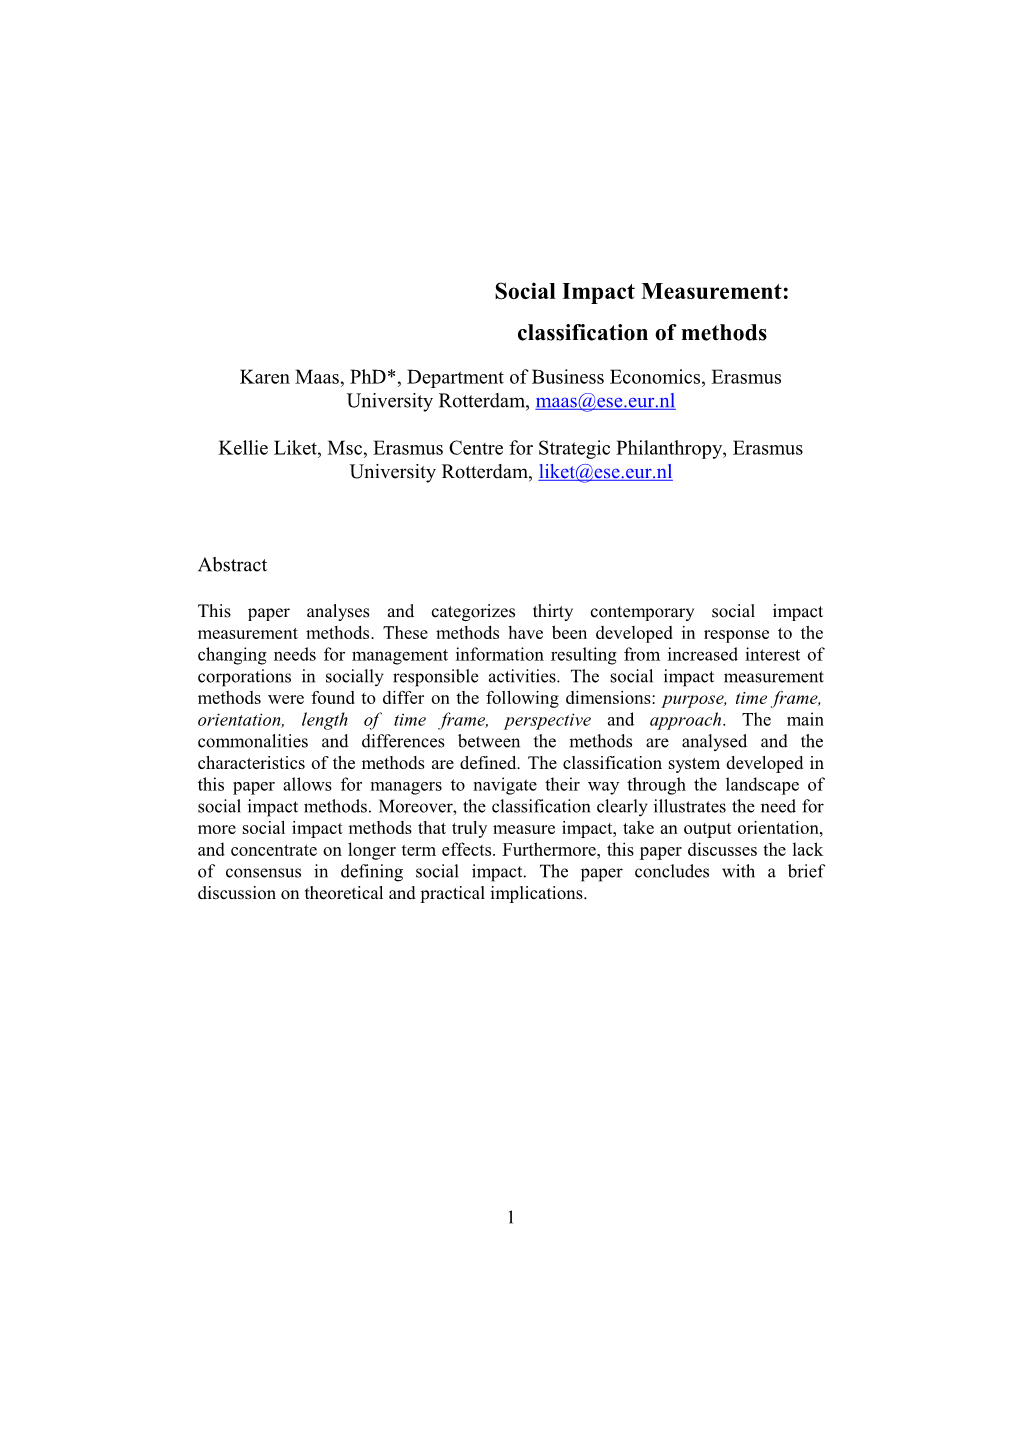 Social Impact Measurement: Classification of Methods